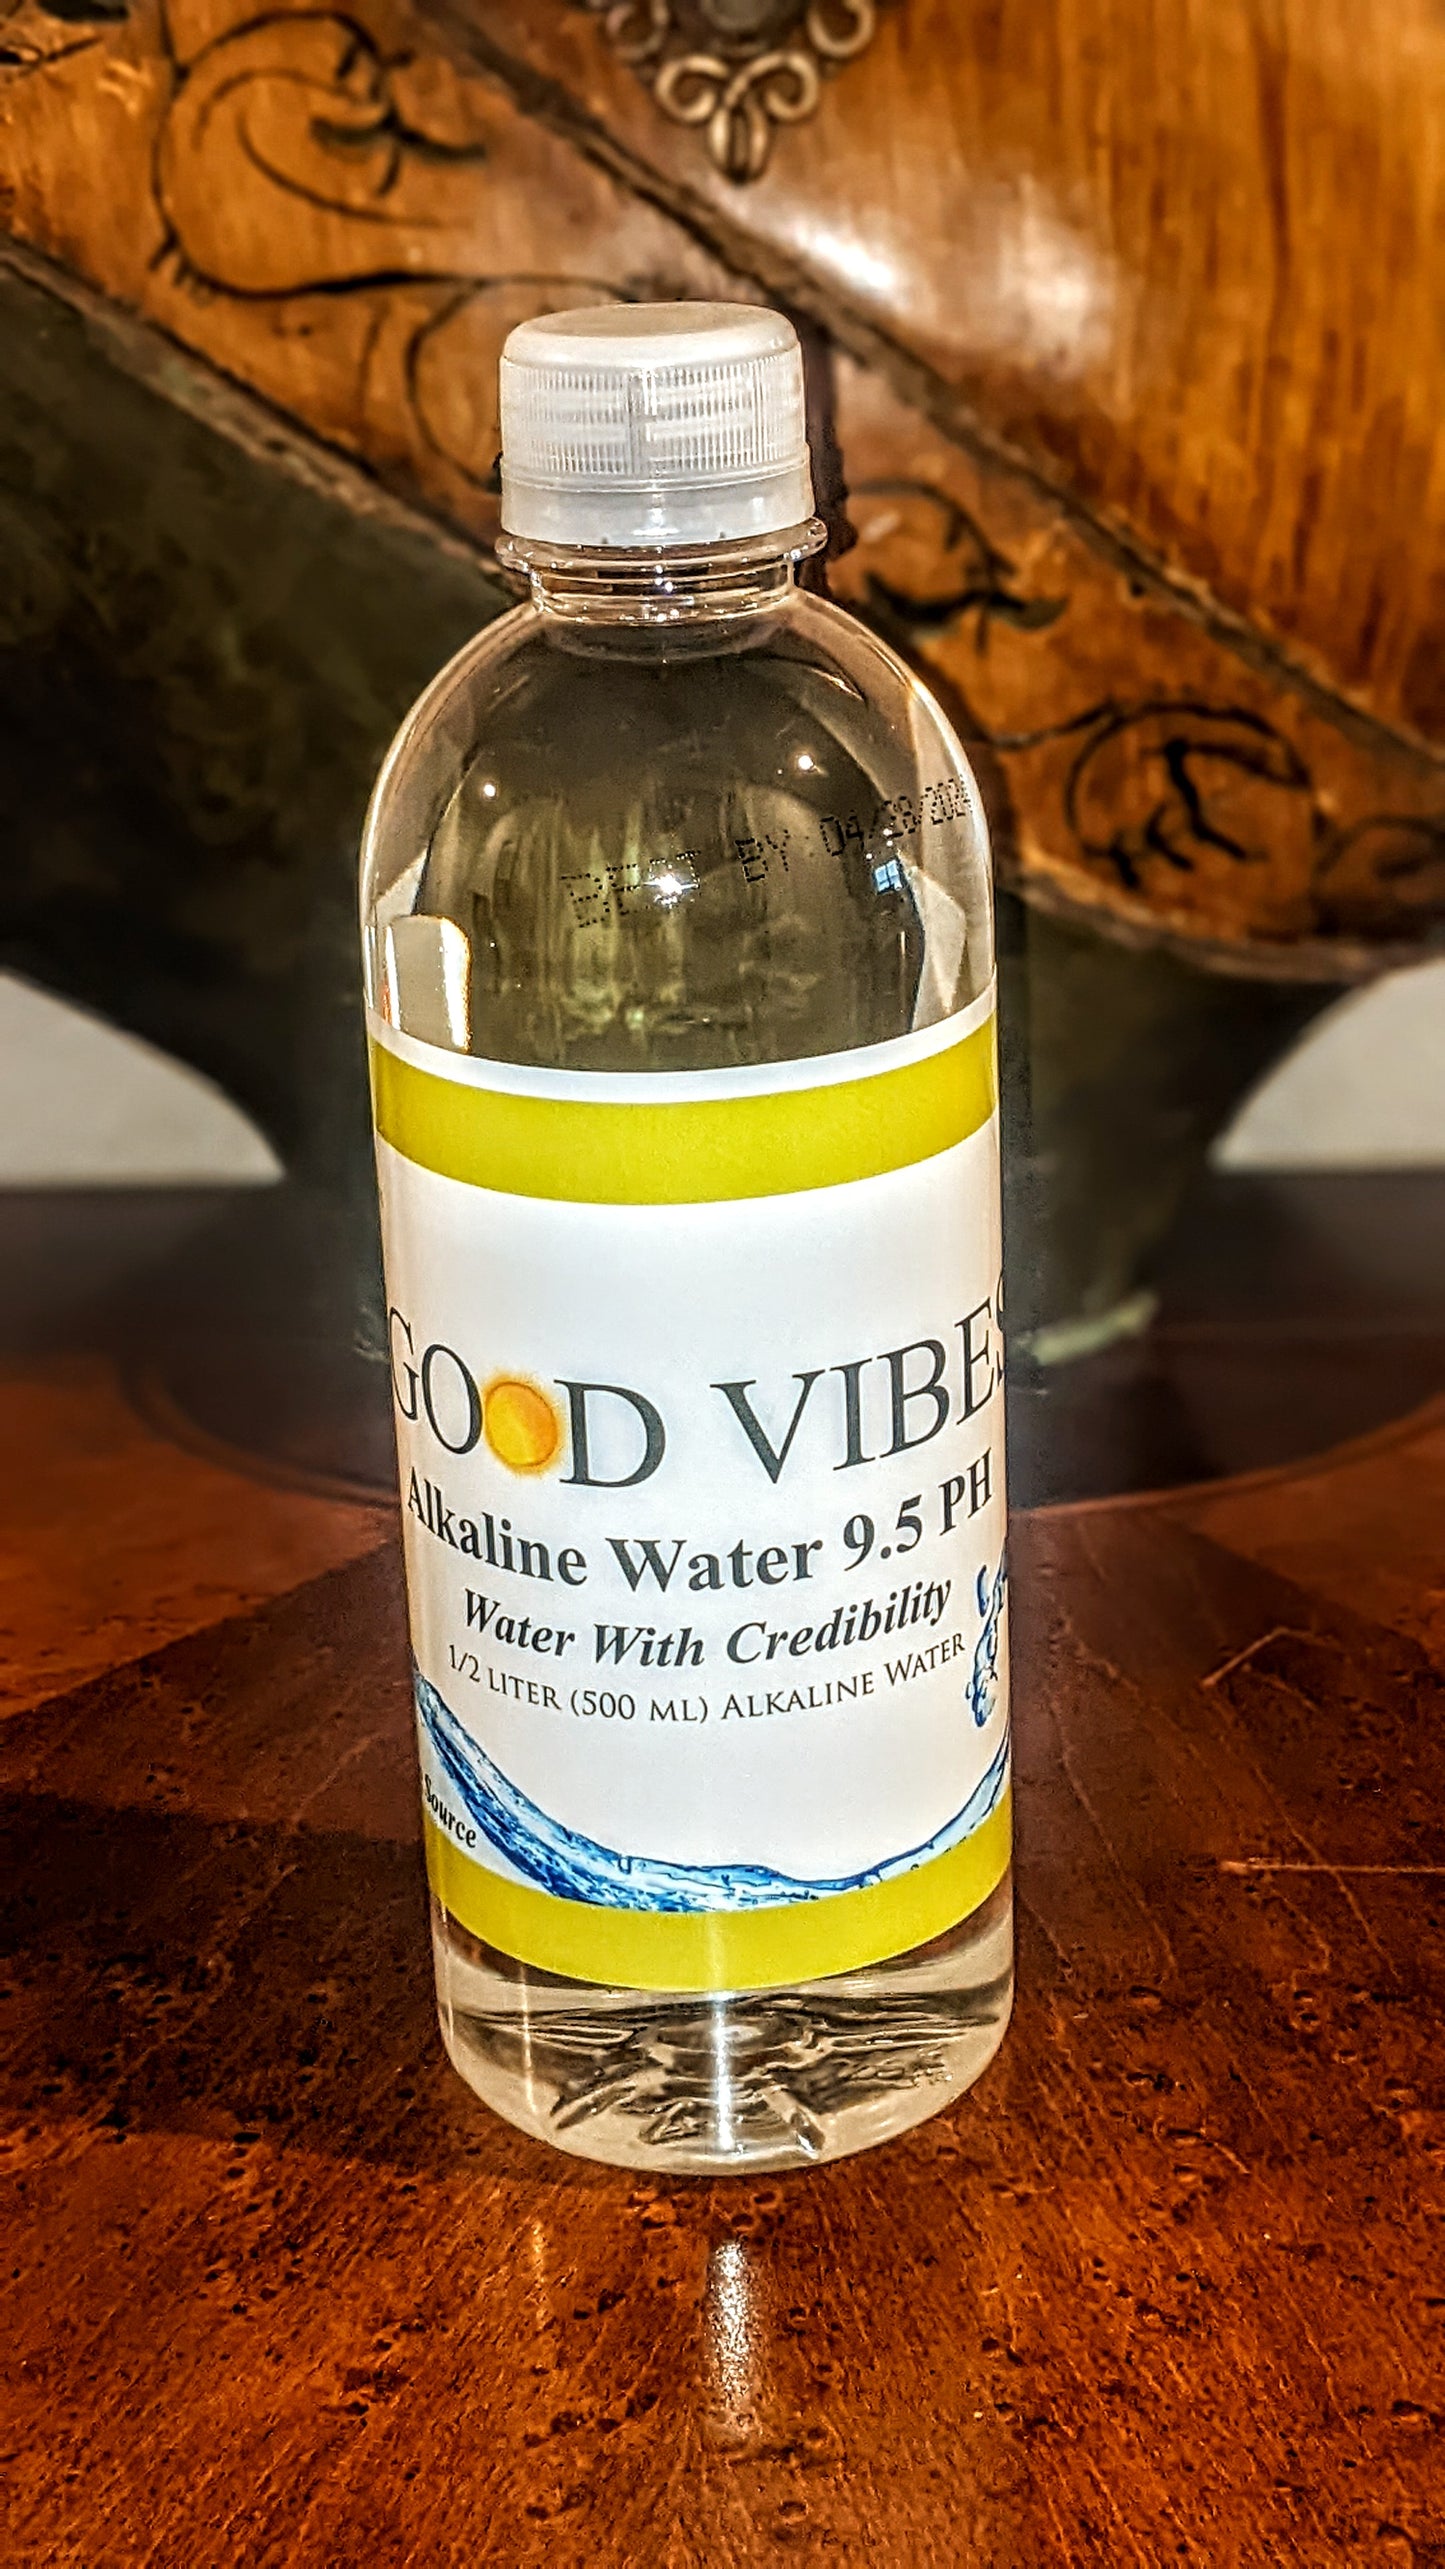 Good vibes alkaline water